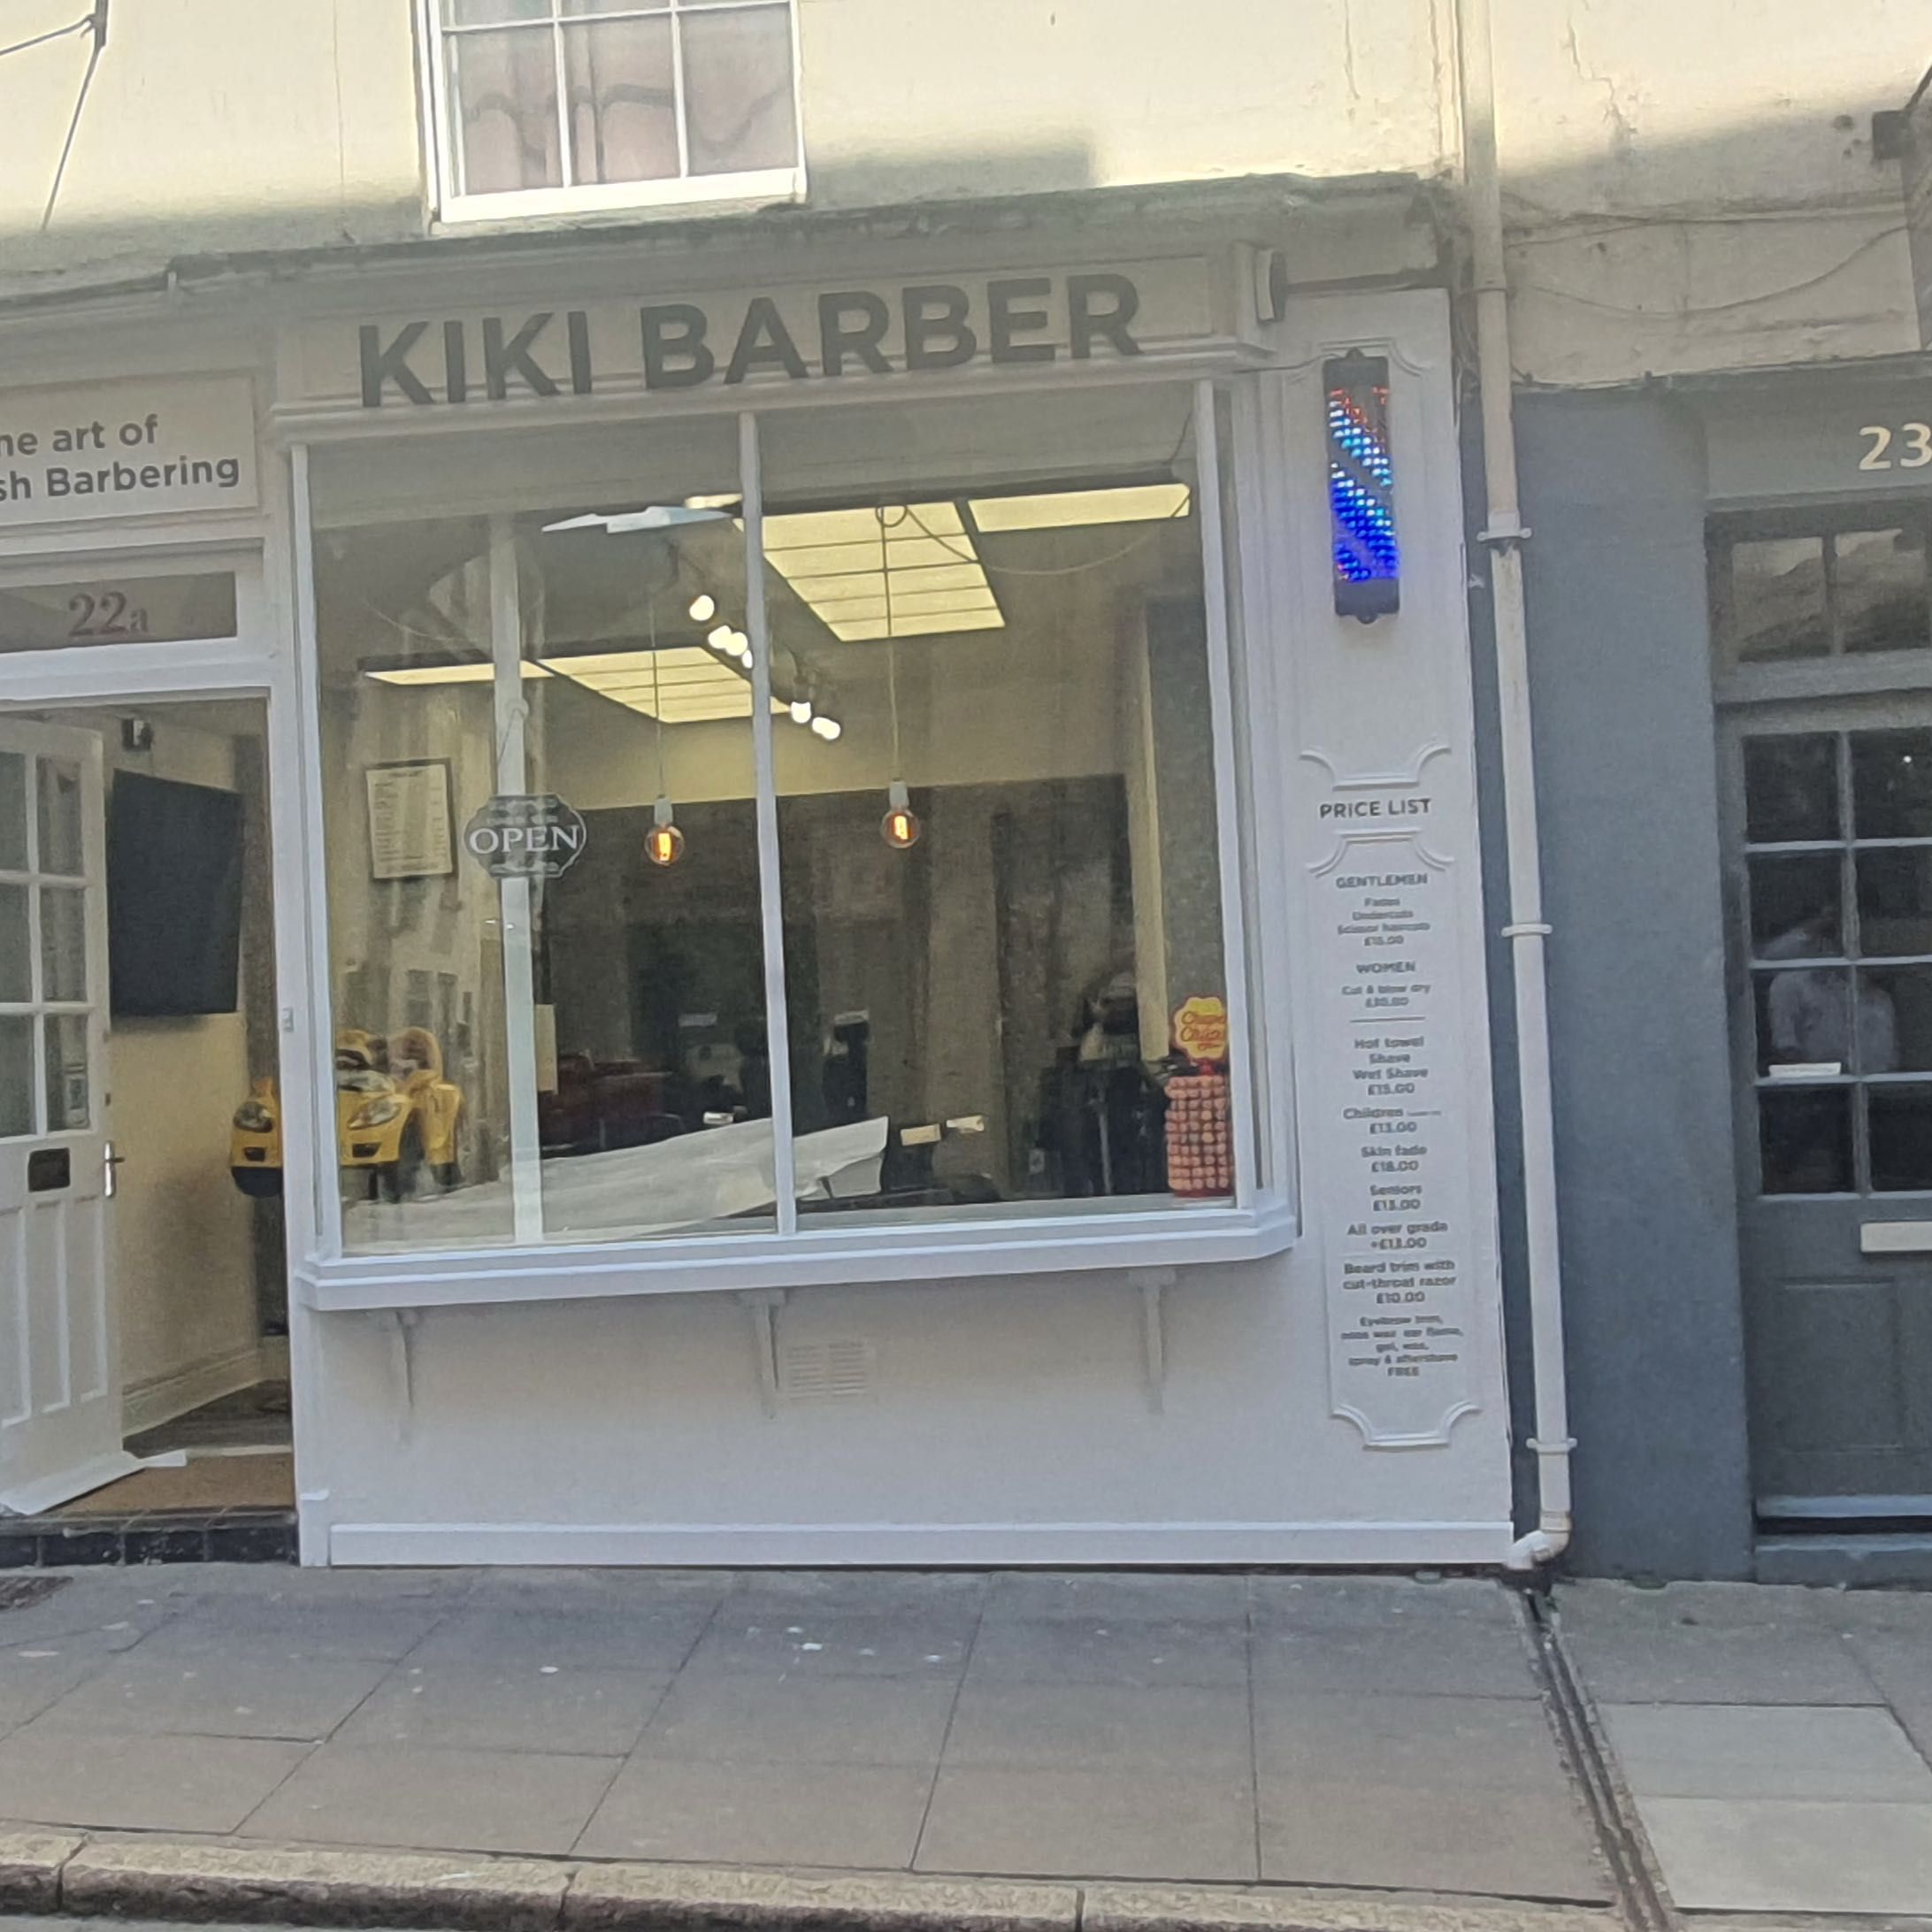 Kiki Barber, Broad Street, 22a, BA1 5LN, Bath